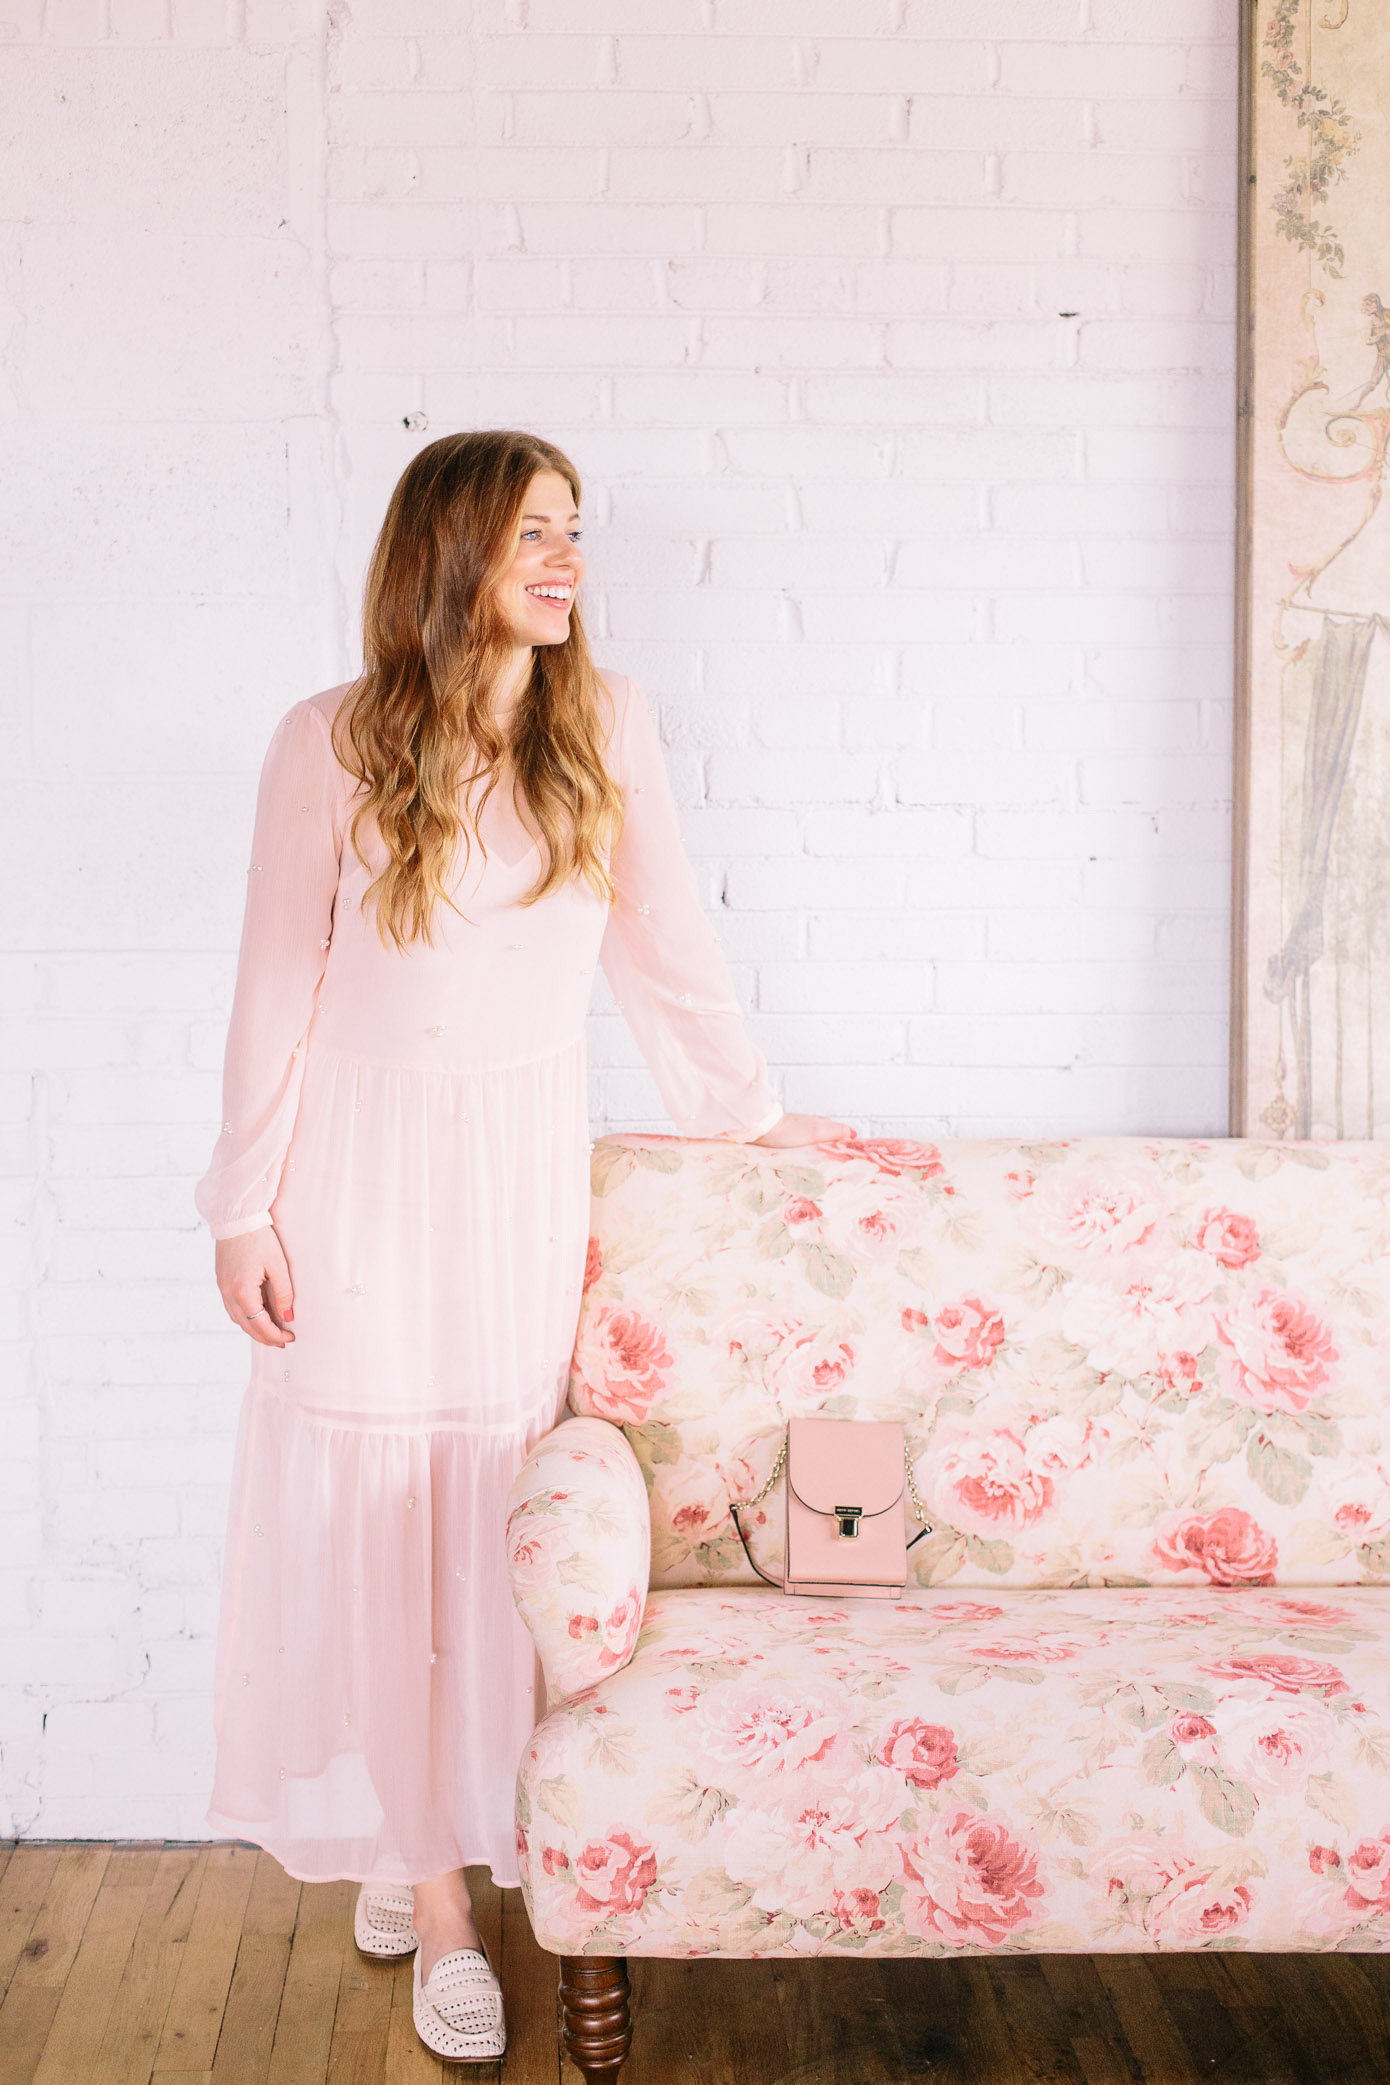 Pearl Embellished Blush Midi Dress | Louella Reese Life & Style Blog